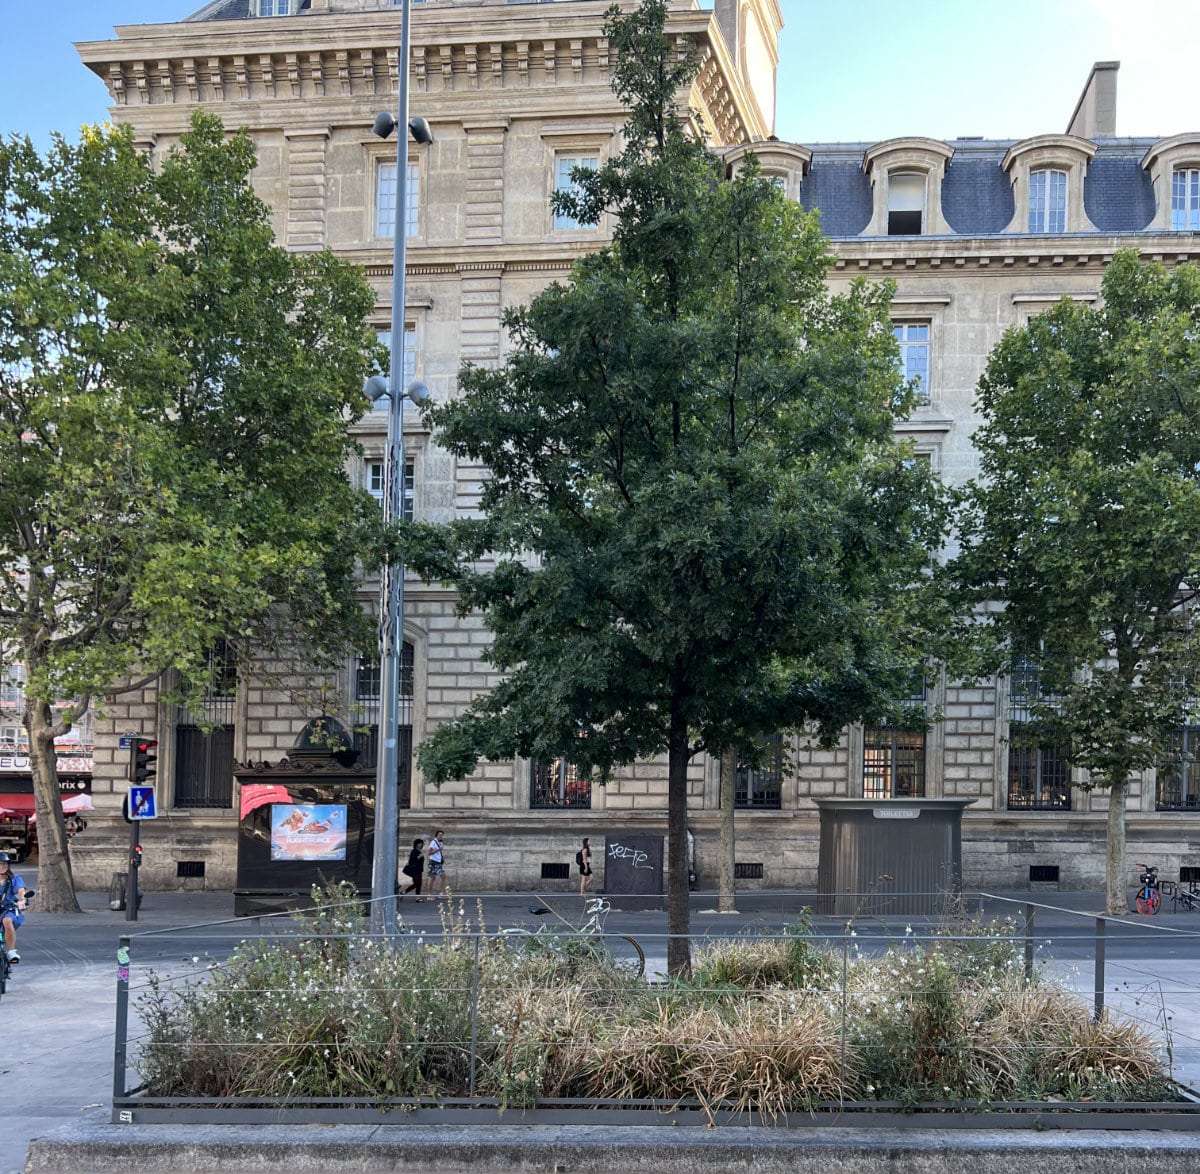 The memorial tree in Paris.